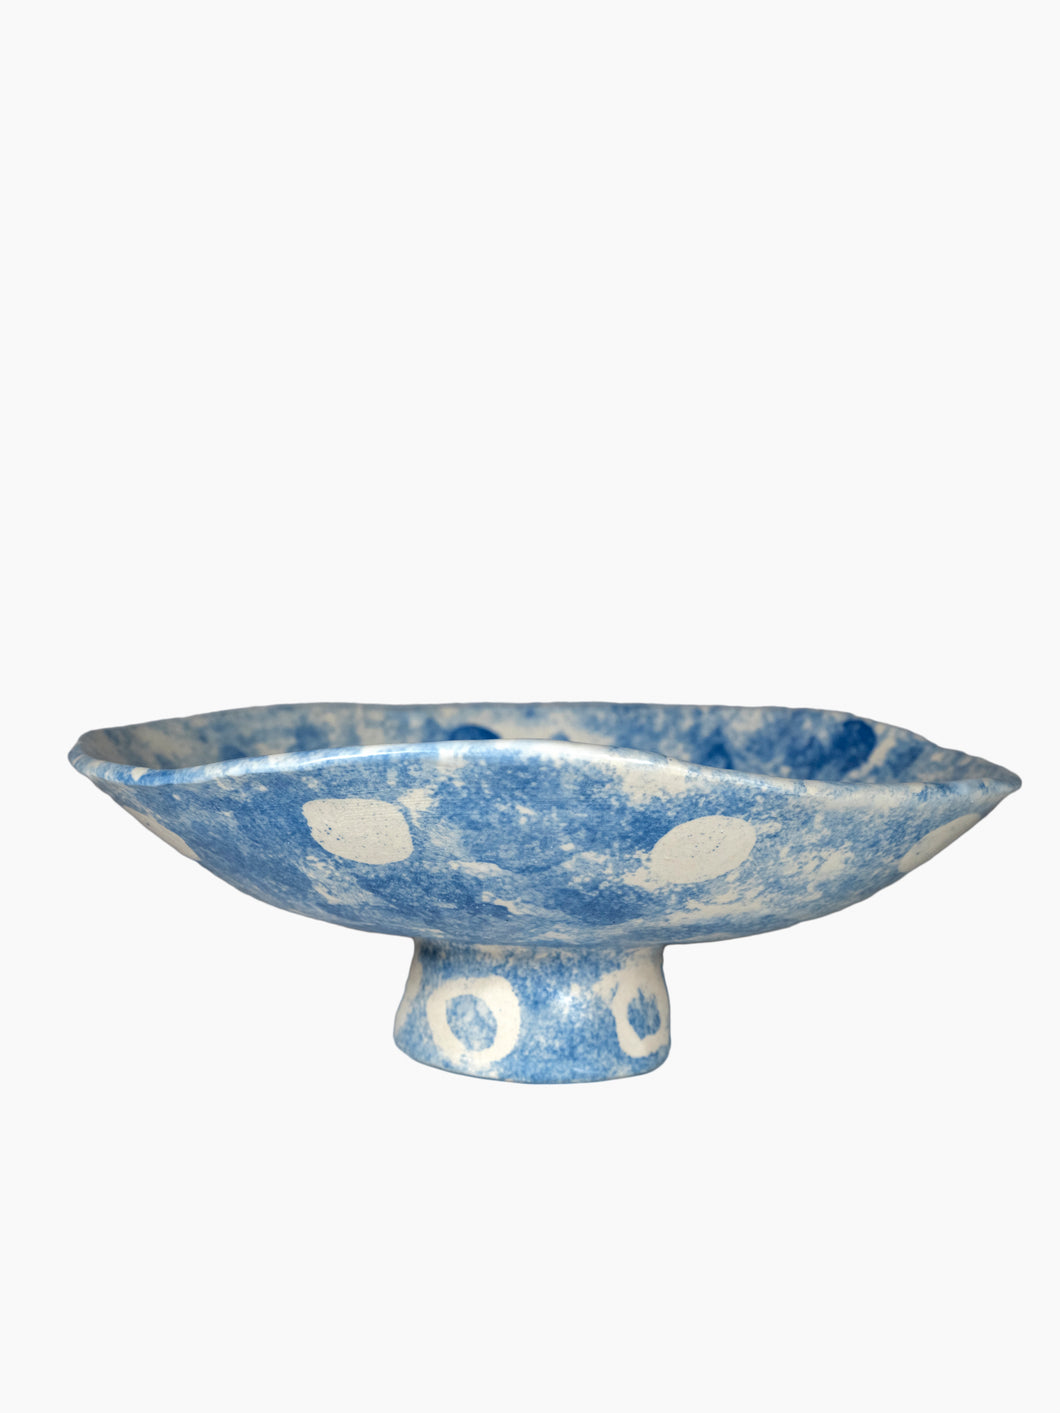 Pedestal Bowl in Blue Sponge